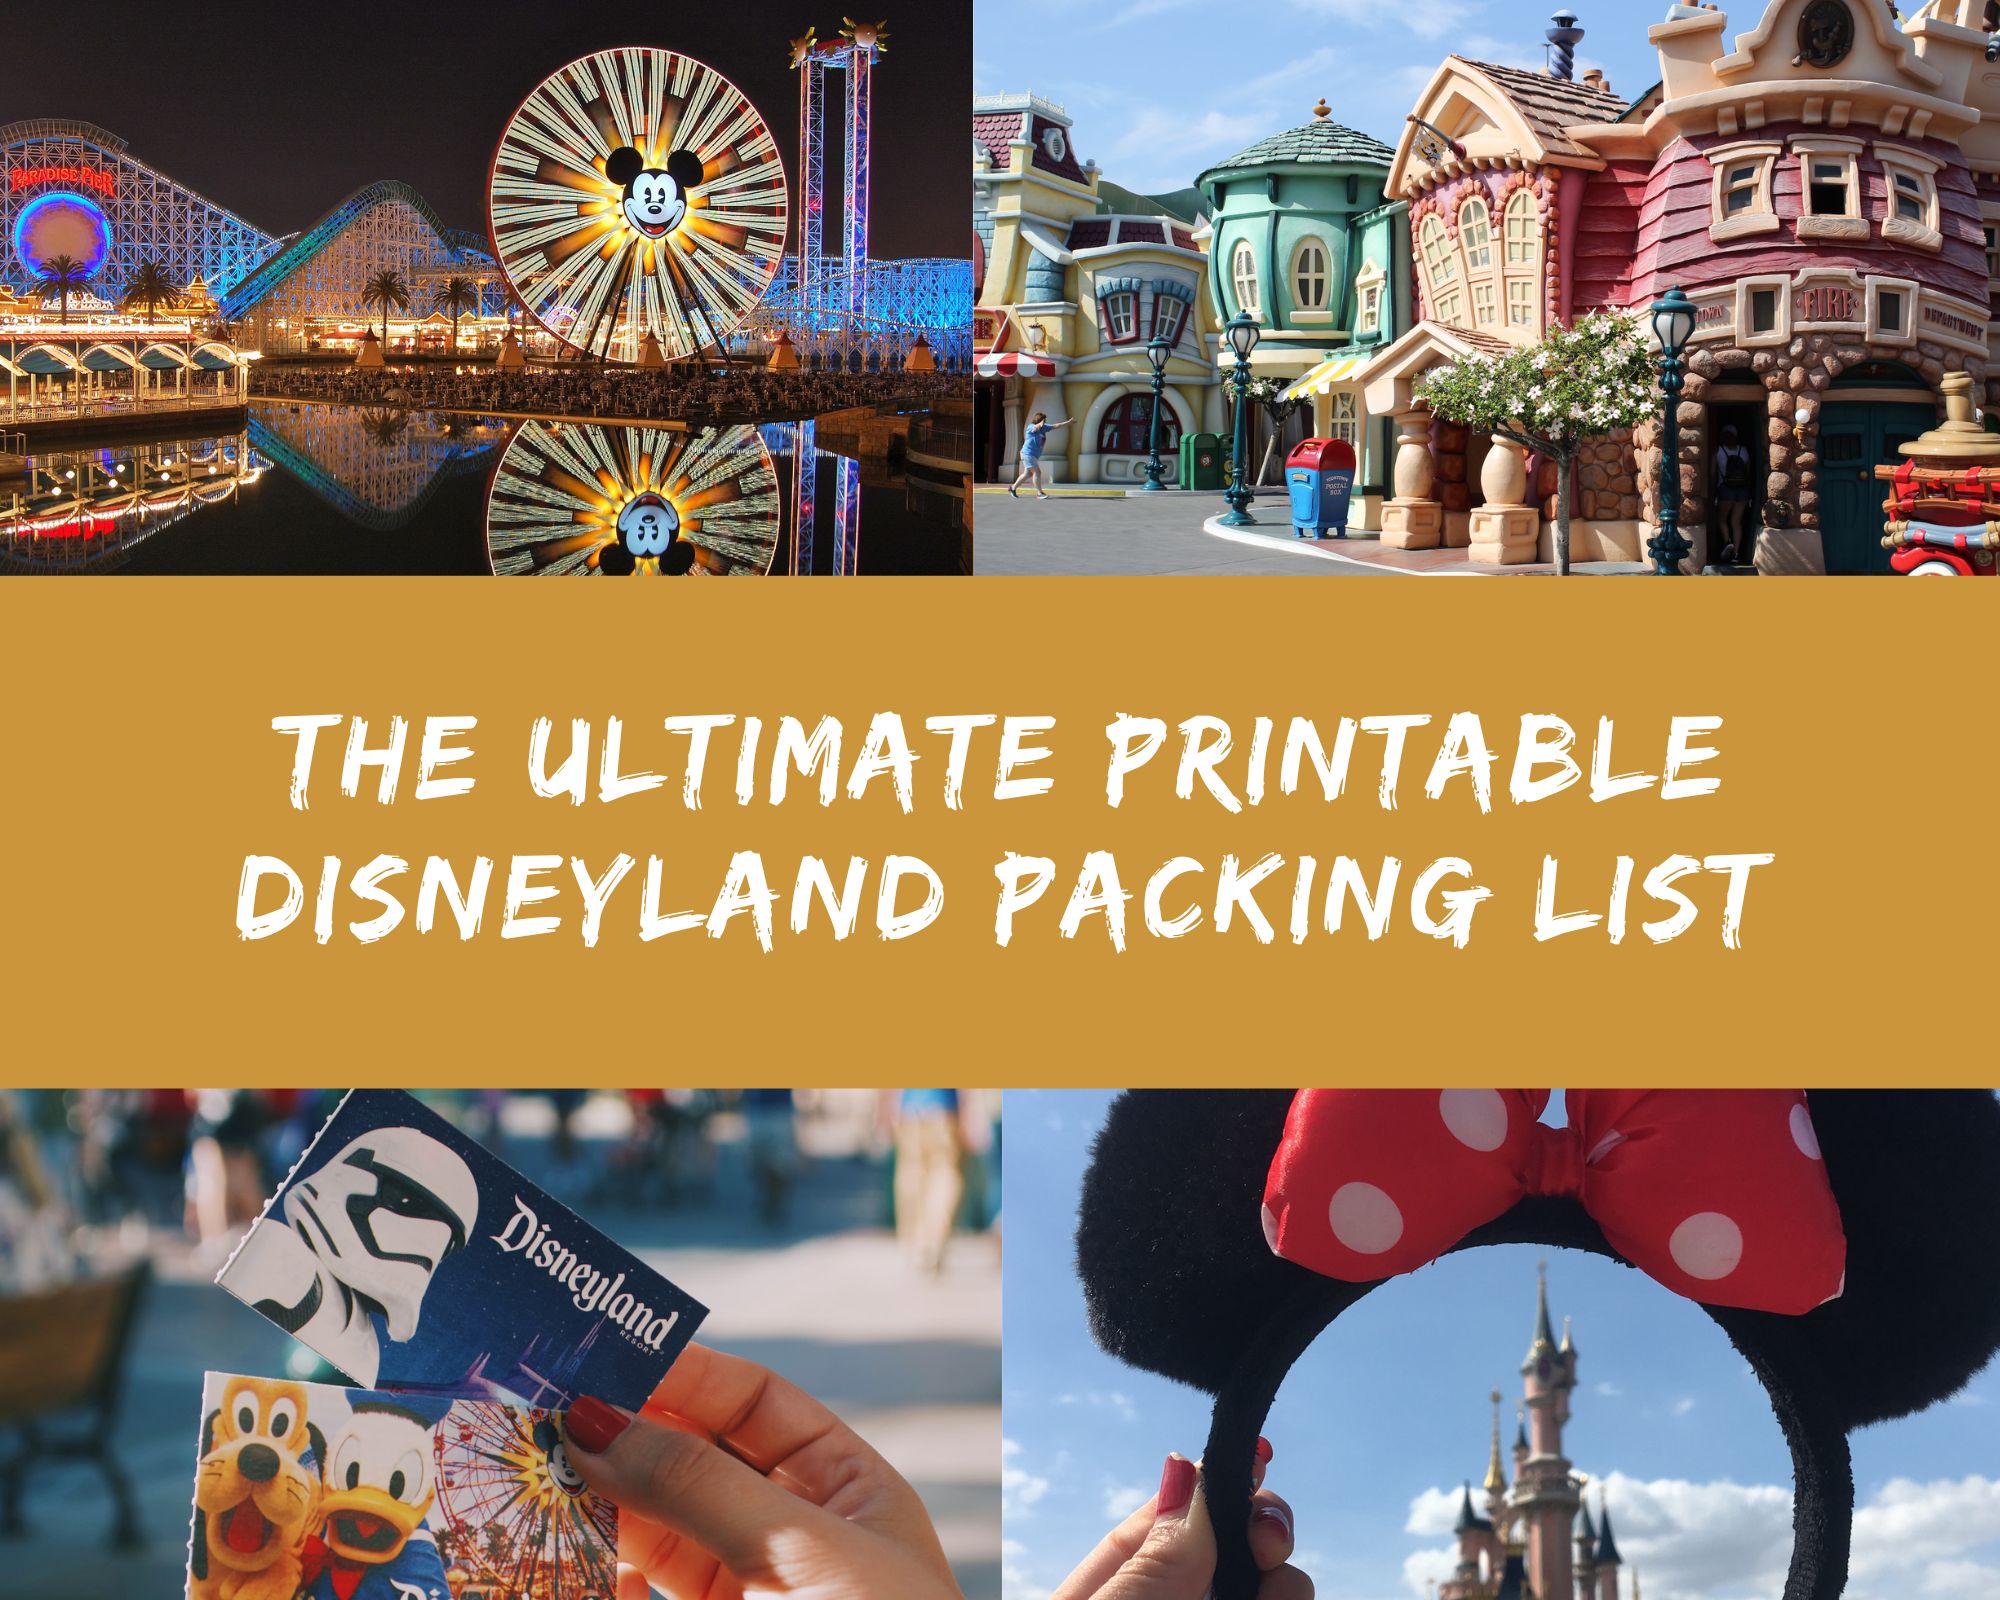 The Ultimate Printable Disneyland Packing List